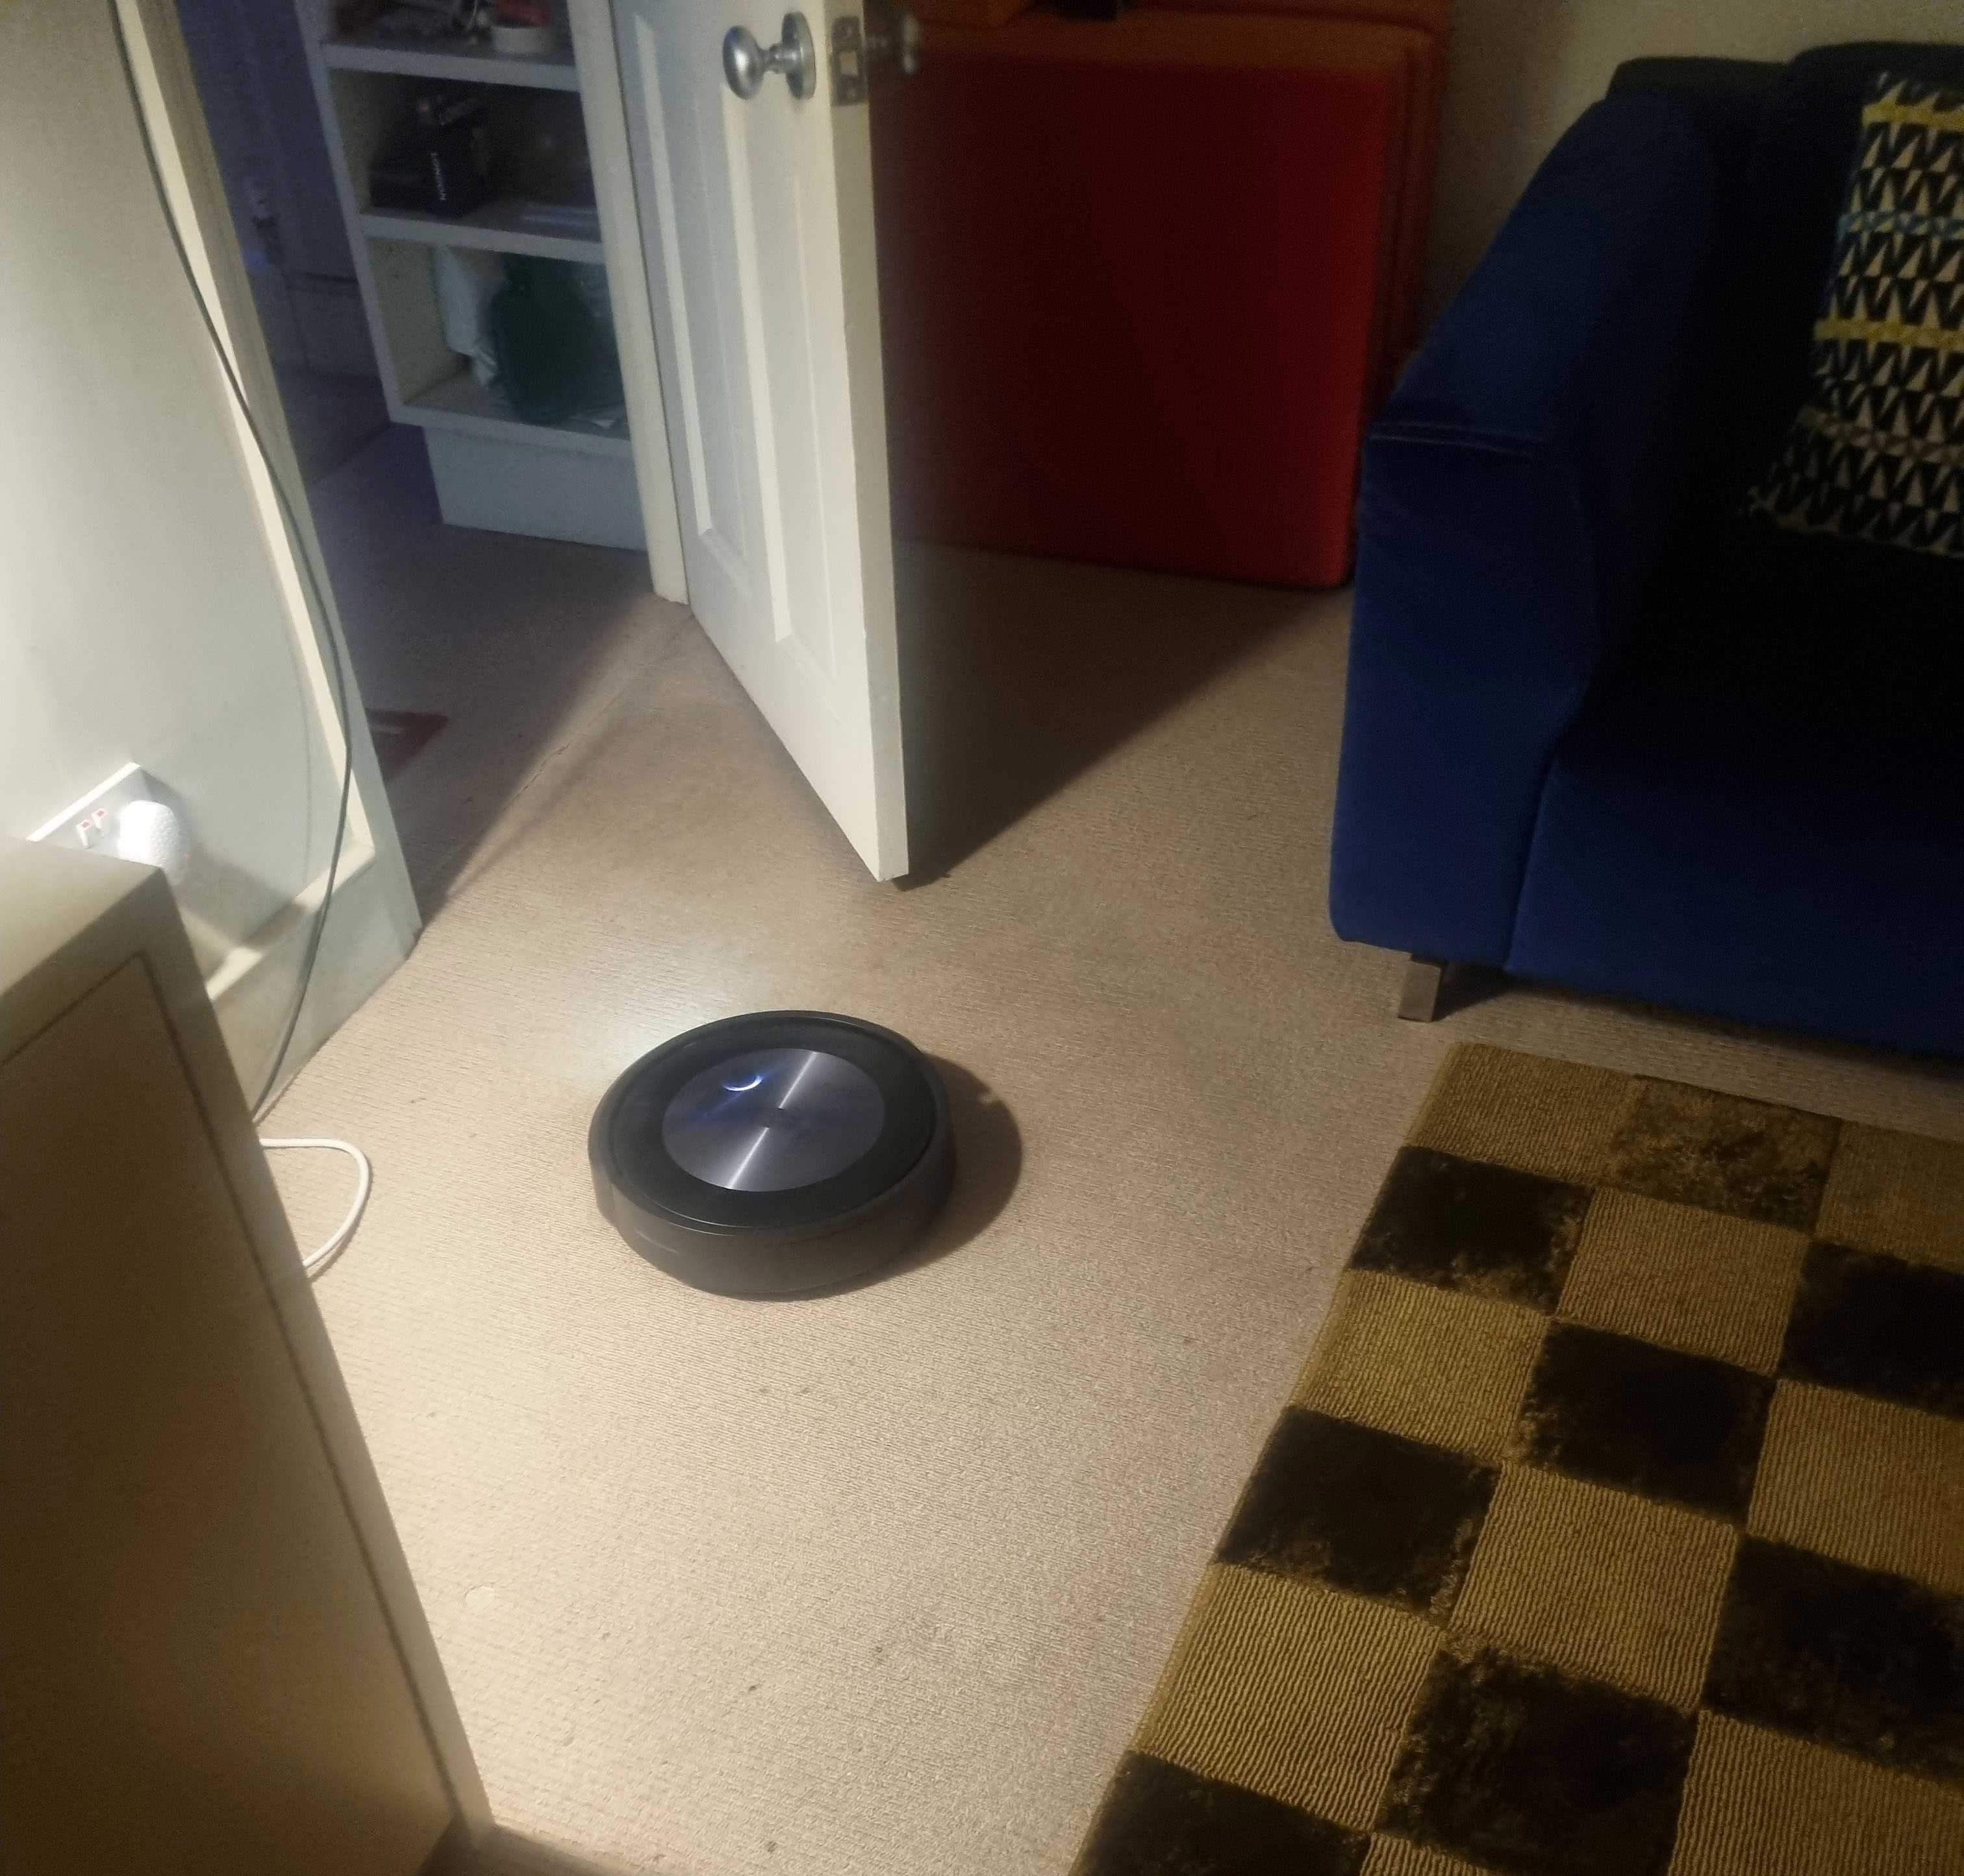 iRobot J5+ vacuums and mops floors